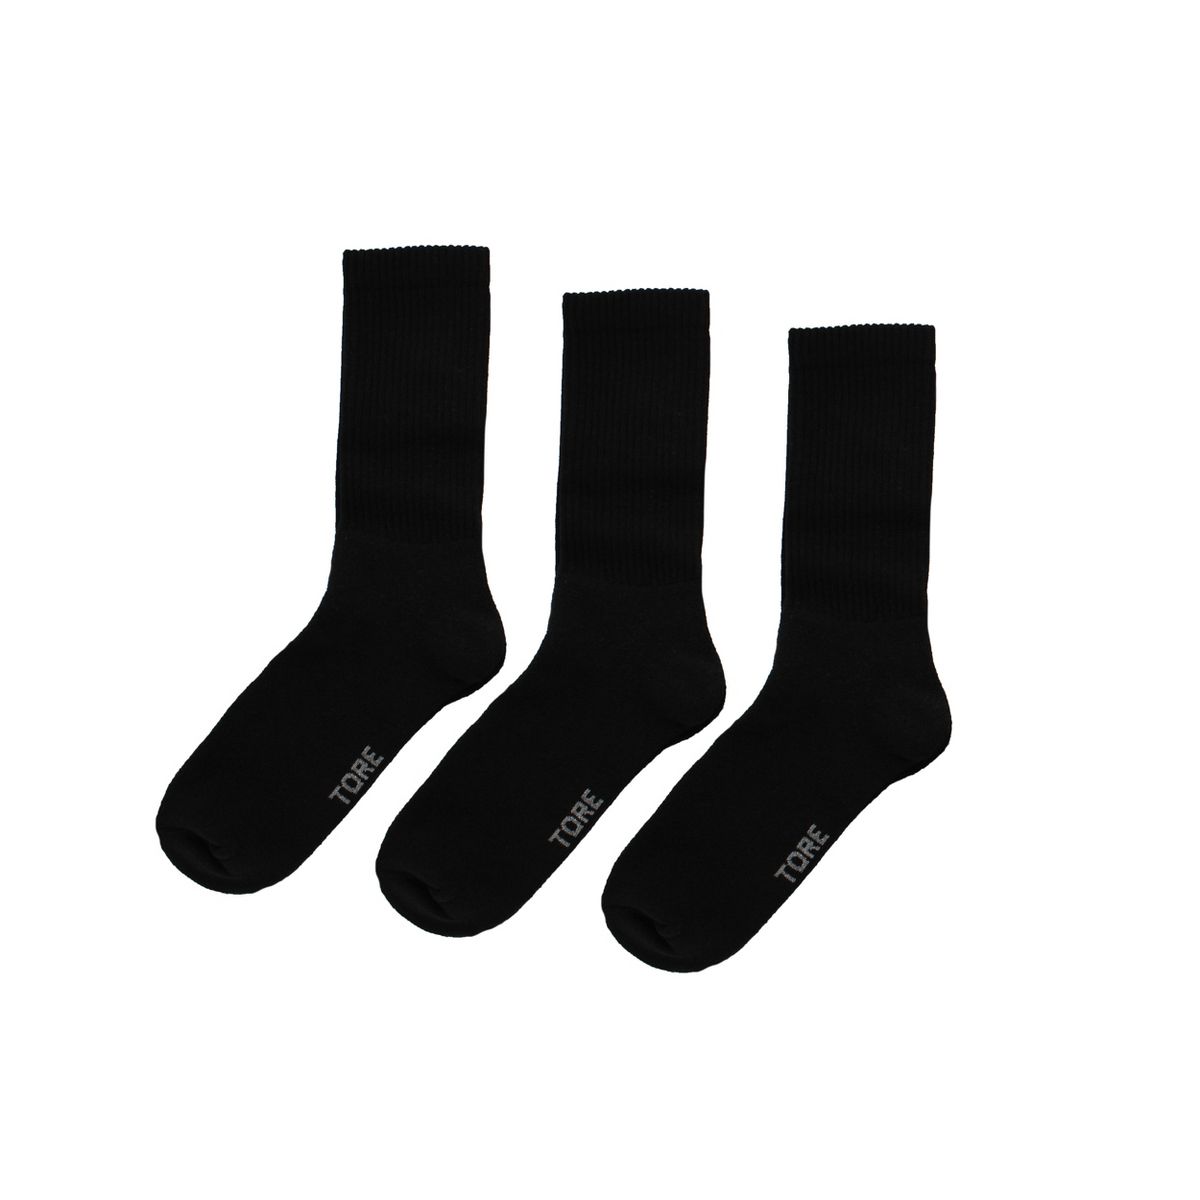 TORE 3Pk 100% Recycled Plain Crew Sports Socks - Men's